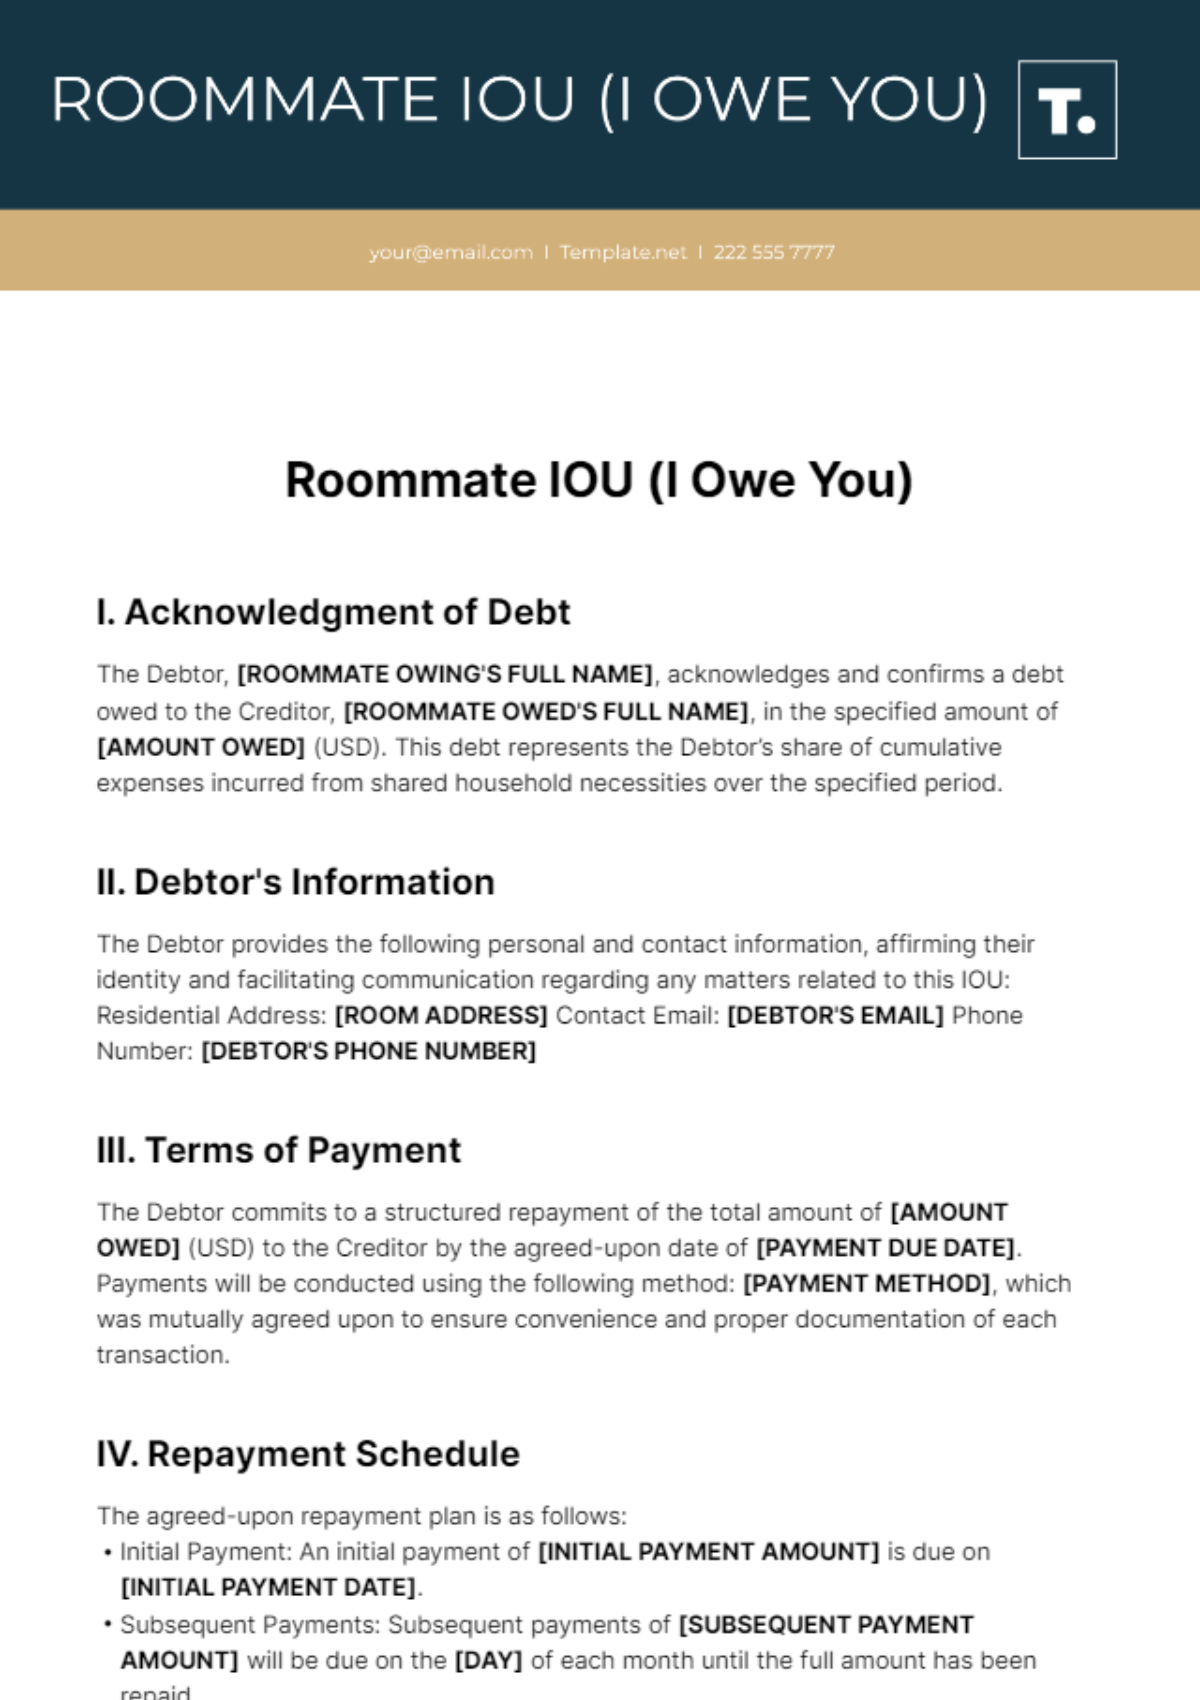 Free Roommate IOU Template